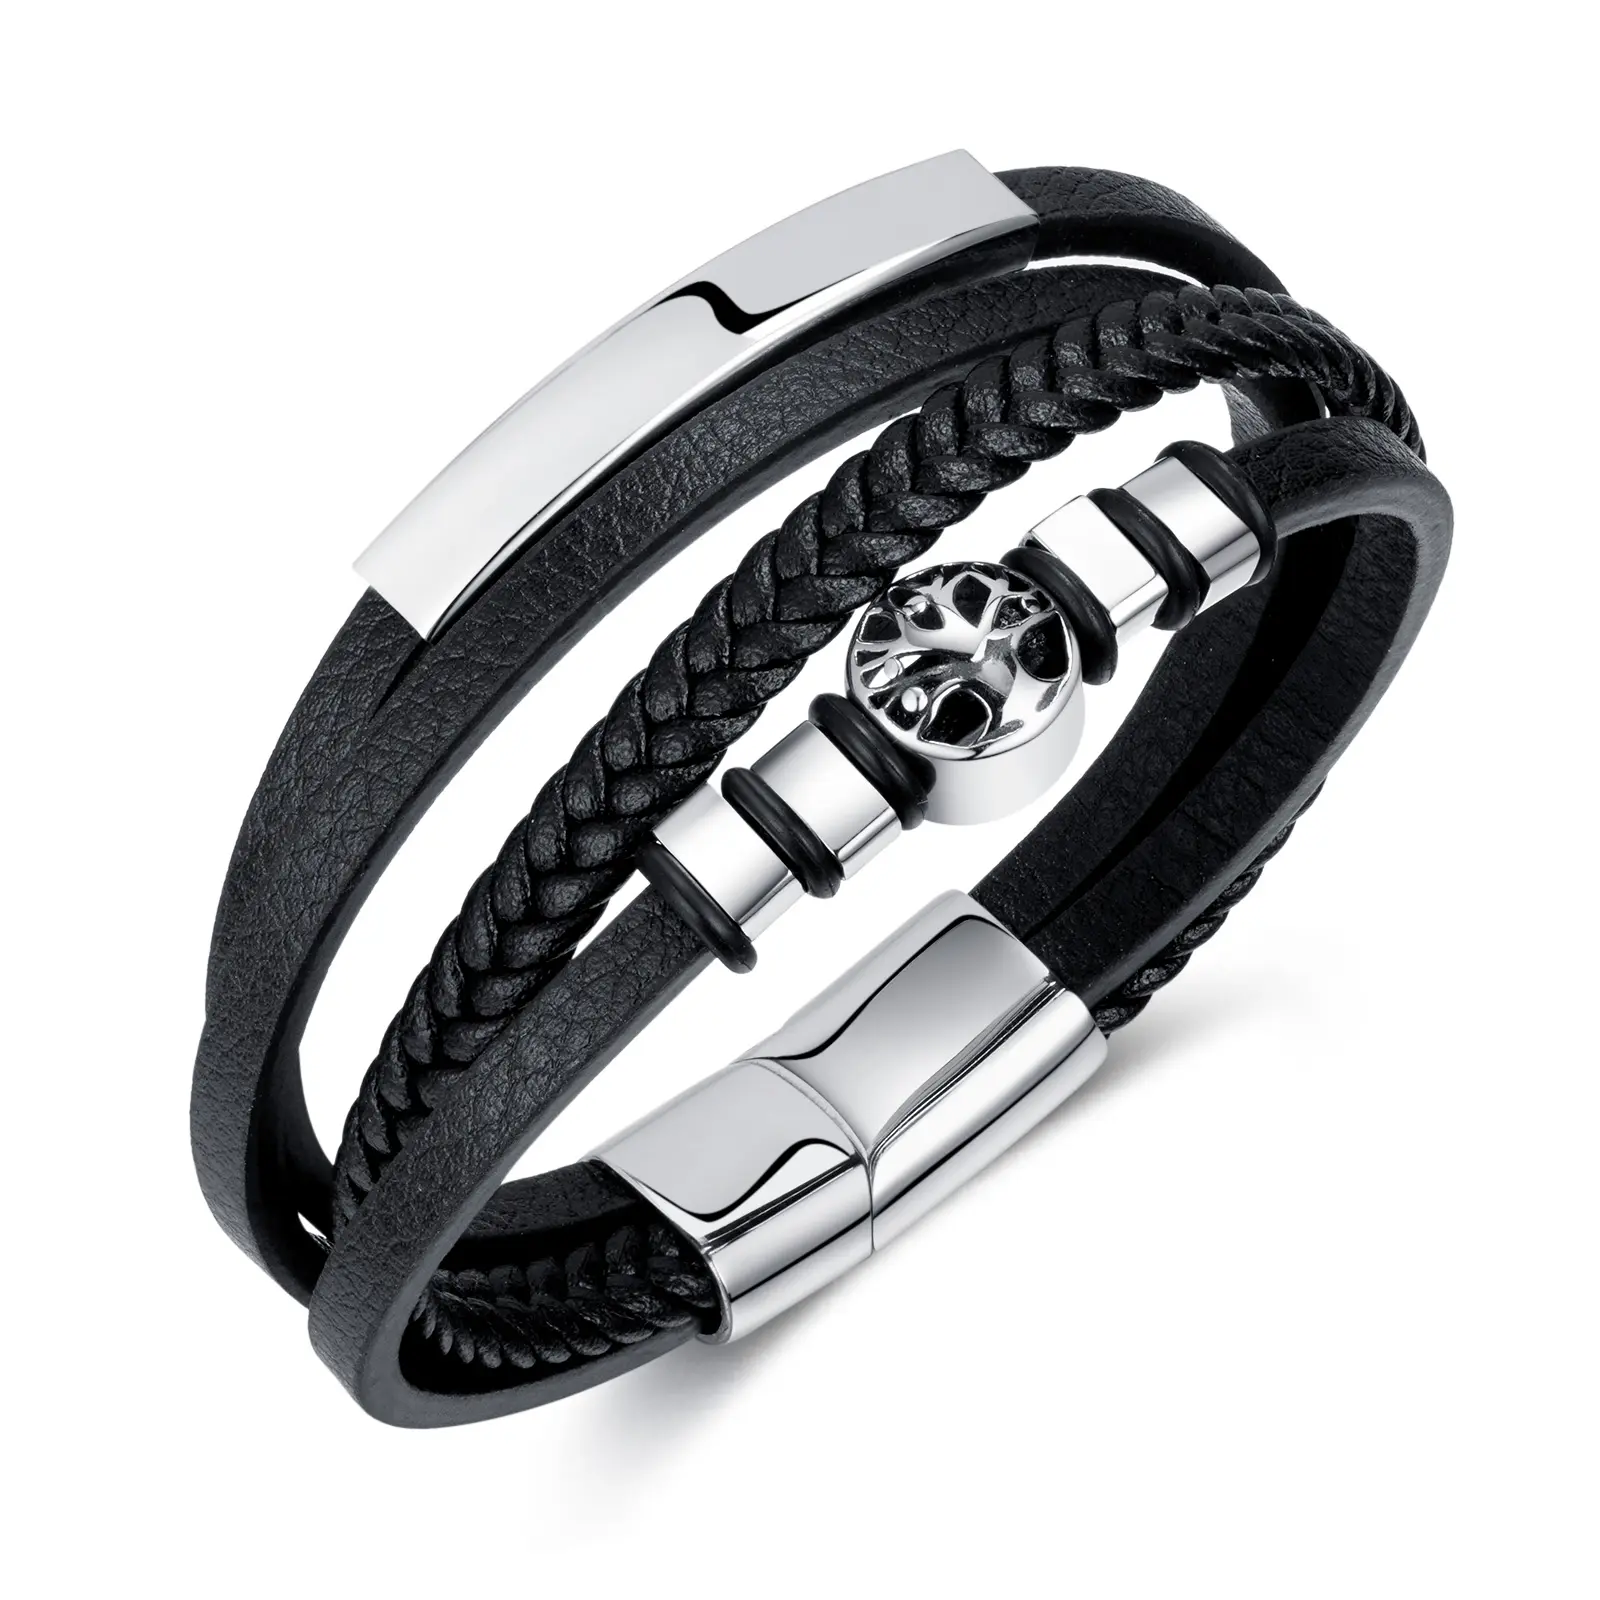 Fashion Handwoven Multilayer Design stainless steel tree of life vintage leather bracelet for men